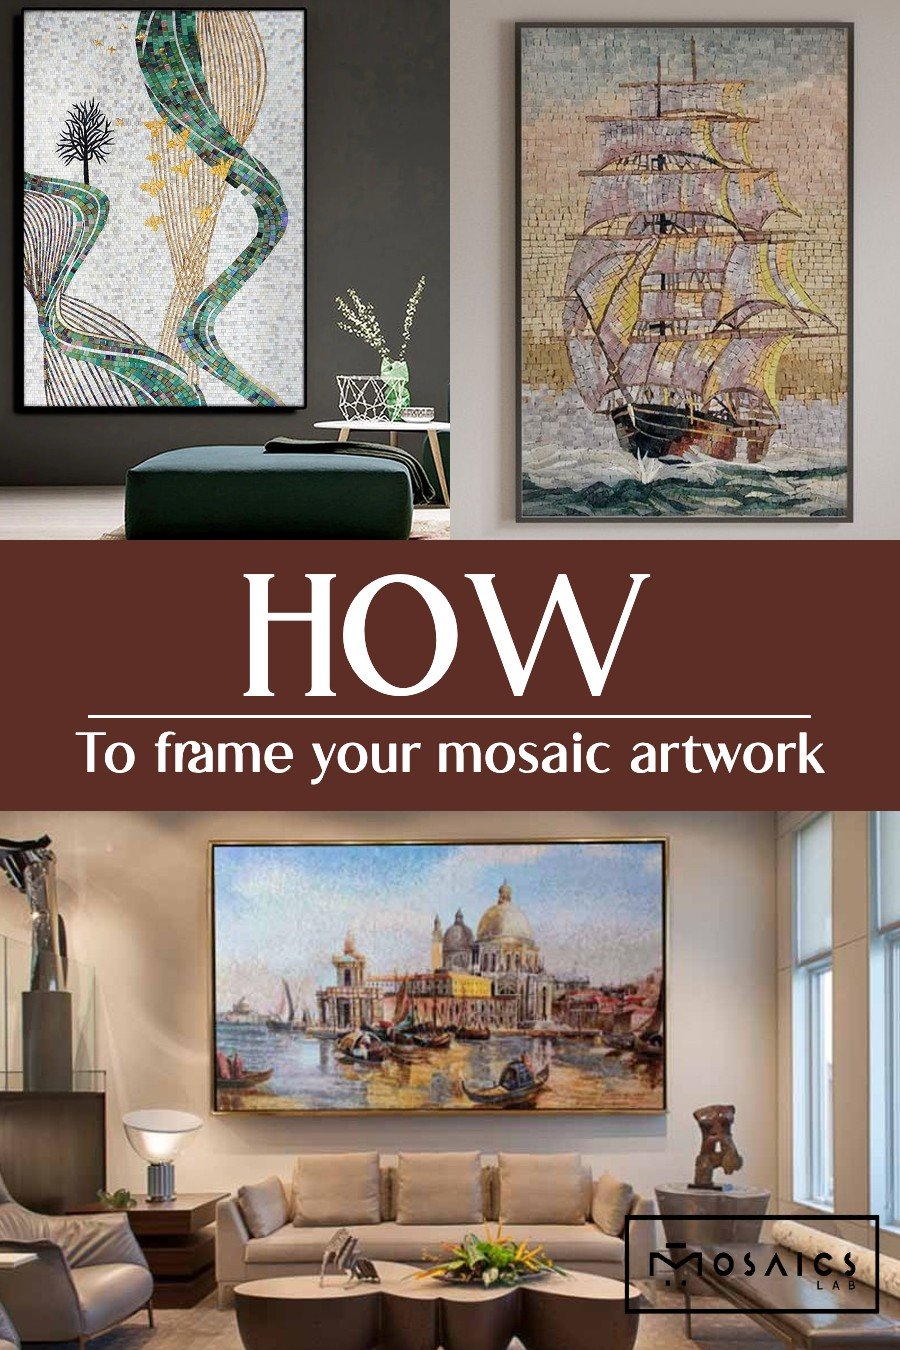 Framed Mosaic Artwork, Mosaic Artwork With A Frame, Mosaic Mural Frame